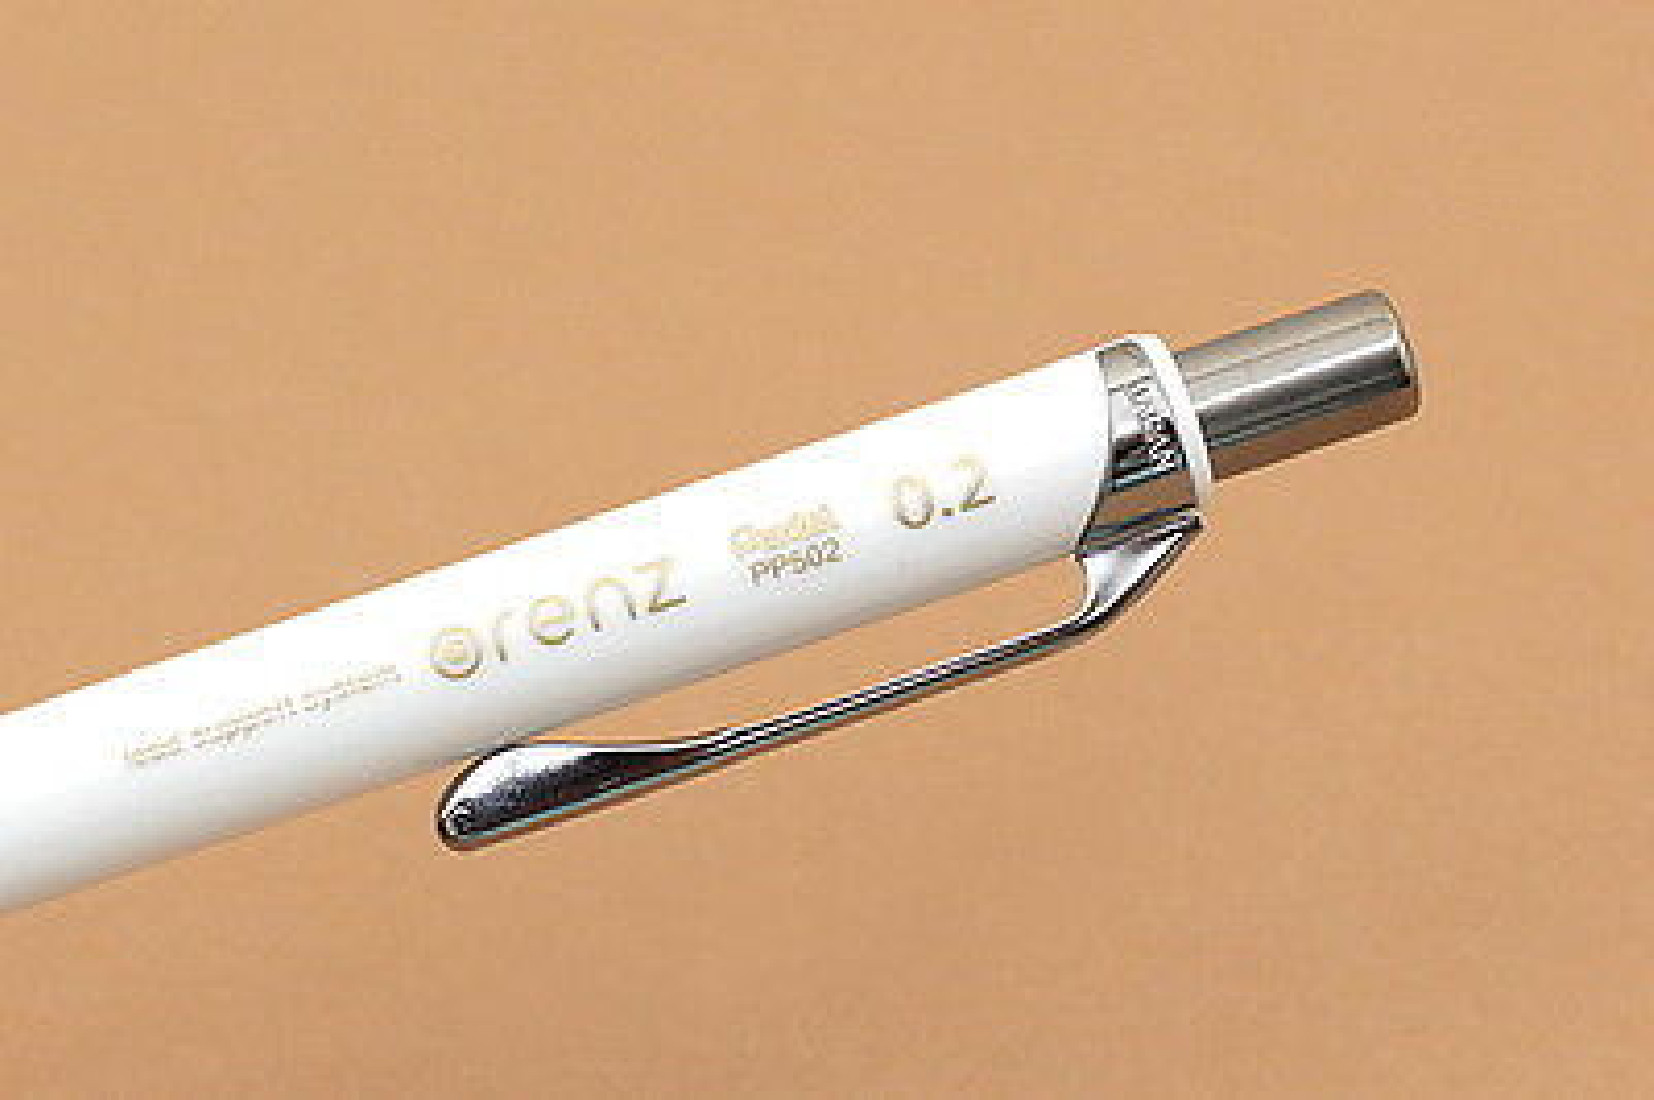 Pentel Orenz 0.2mm White mechanical pencil PP502W